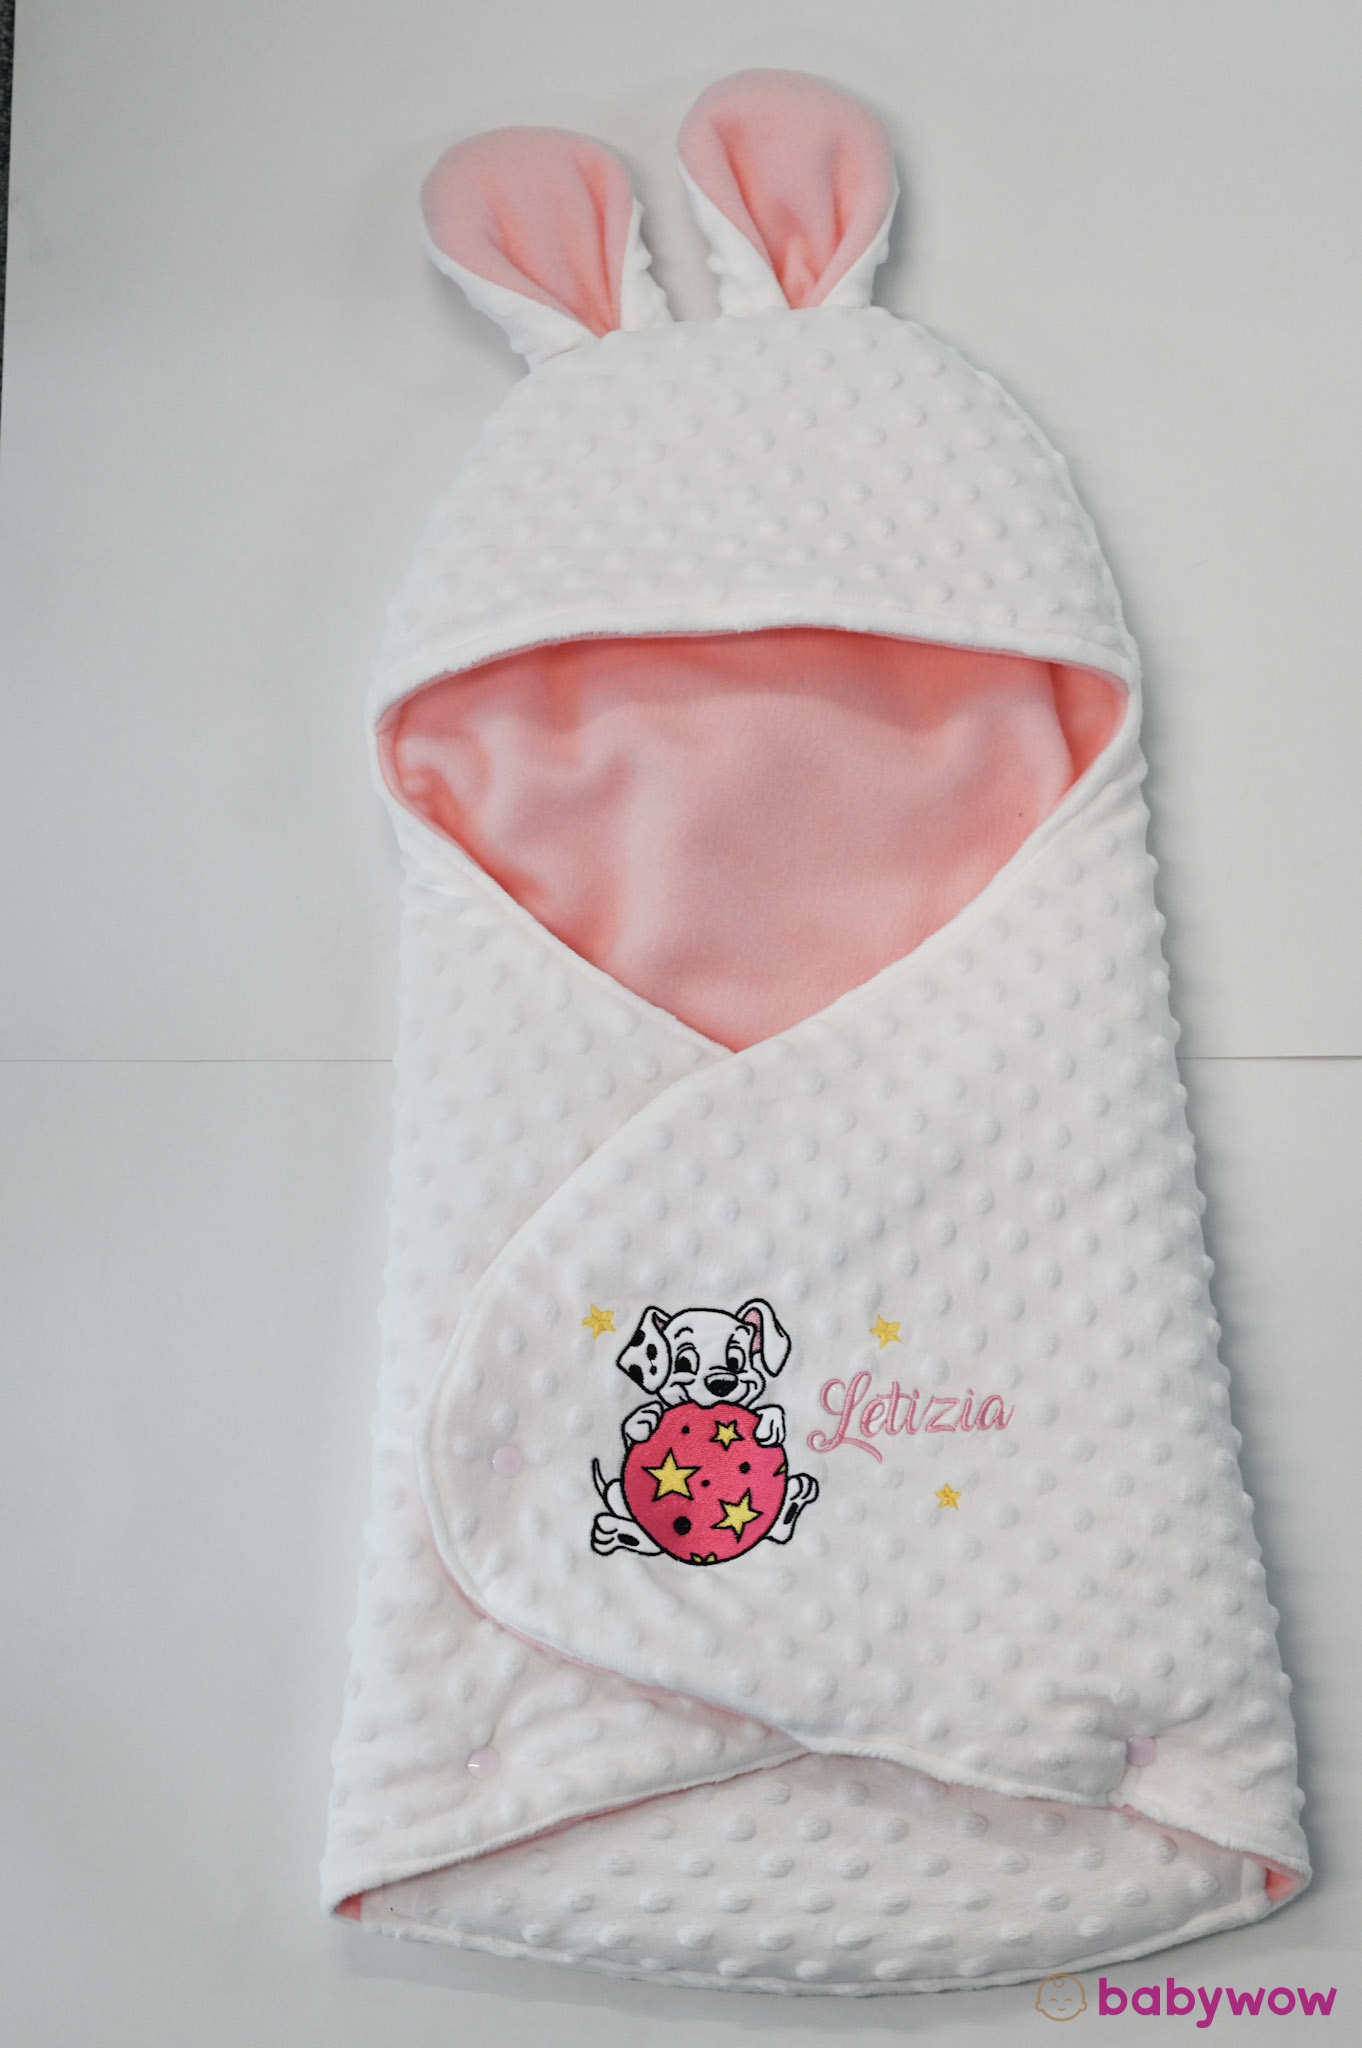 Sleep sack 101 Dalmatians pink